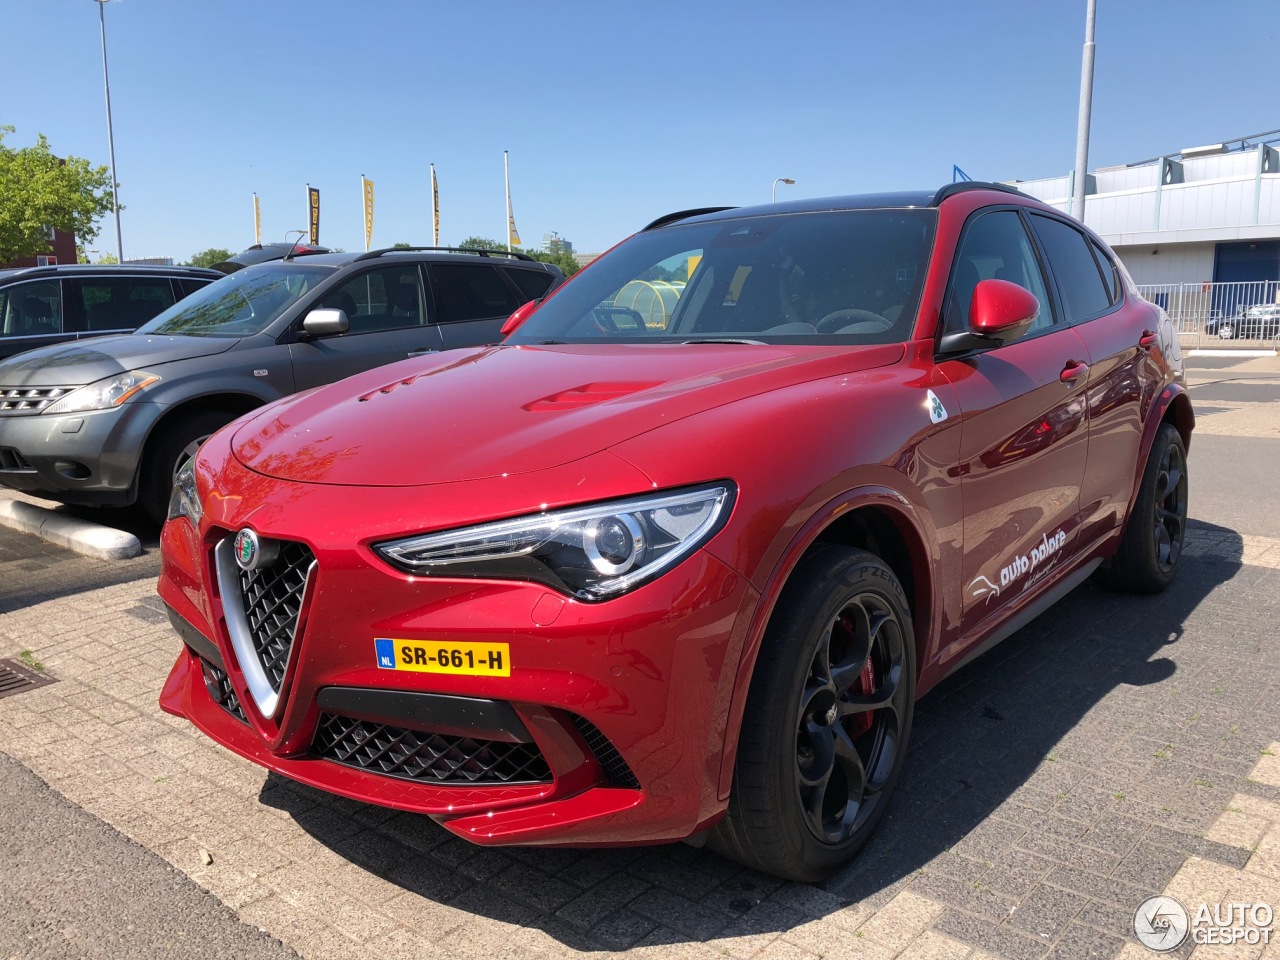 Spot van de dag: Alfa Romeo Stelvio Quadrifoglio